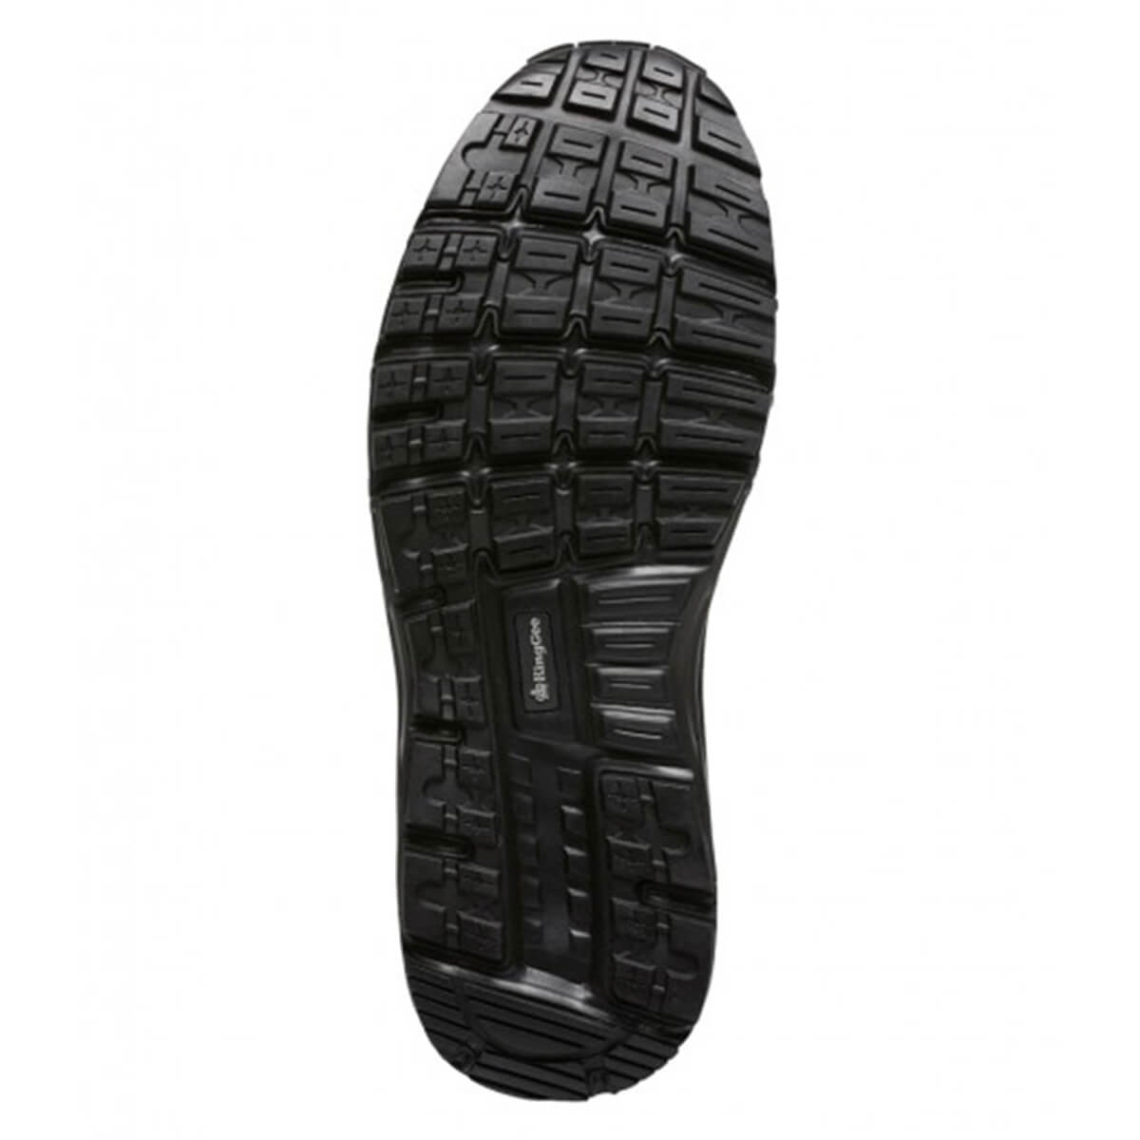 Comptec G44 Leather Safety Shoe - Badger Australia